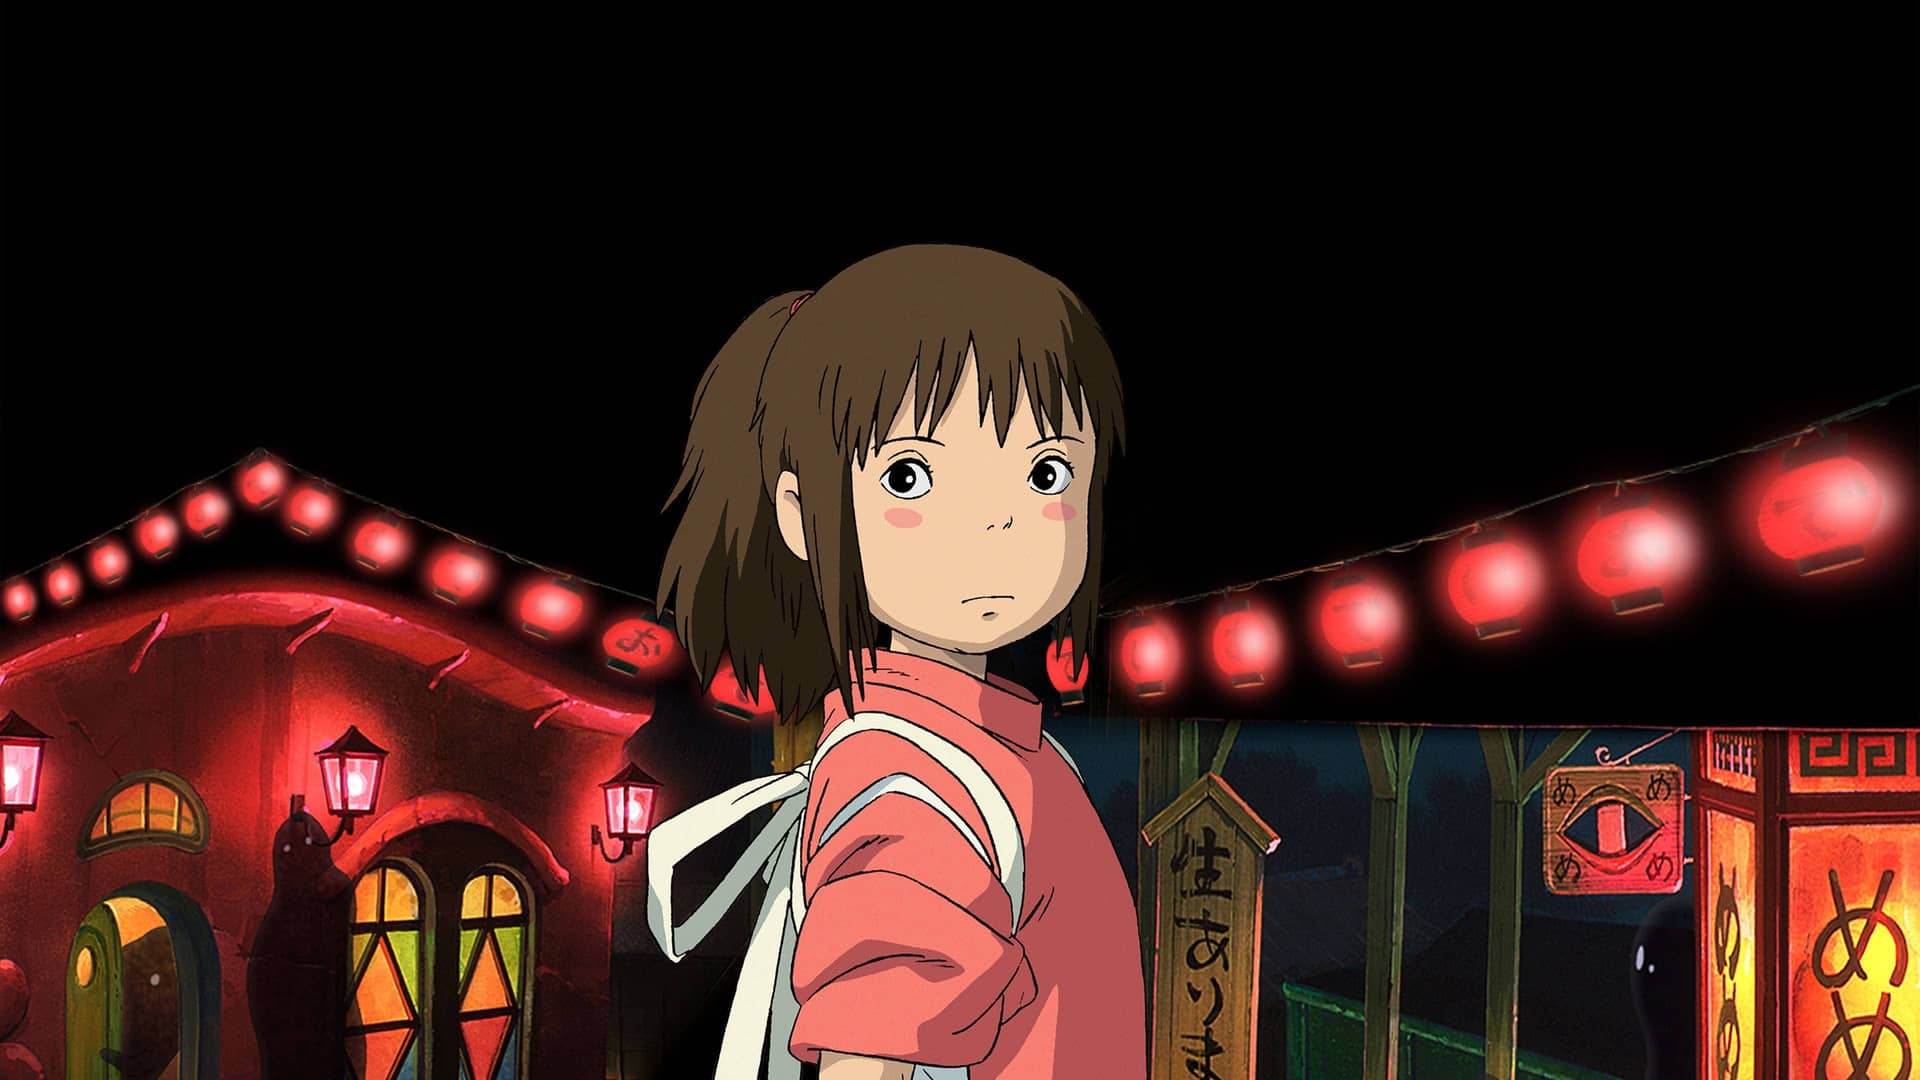 imagen principal de una de las peliculas infantiles de netflix titulada El viaje de Chihiro